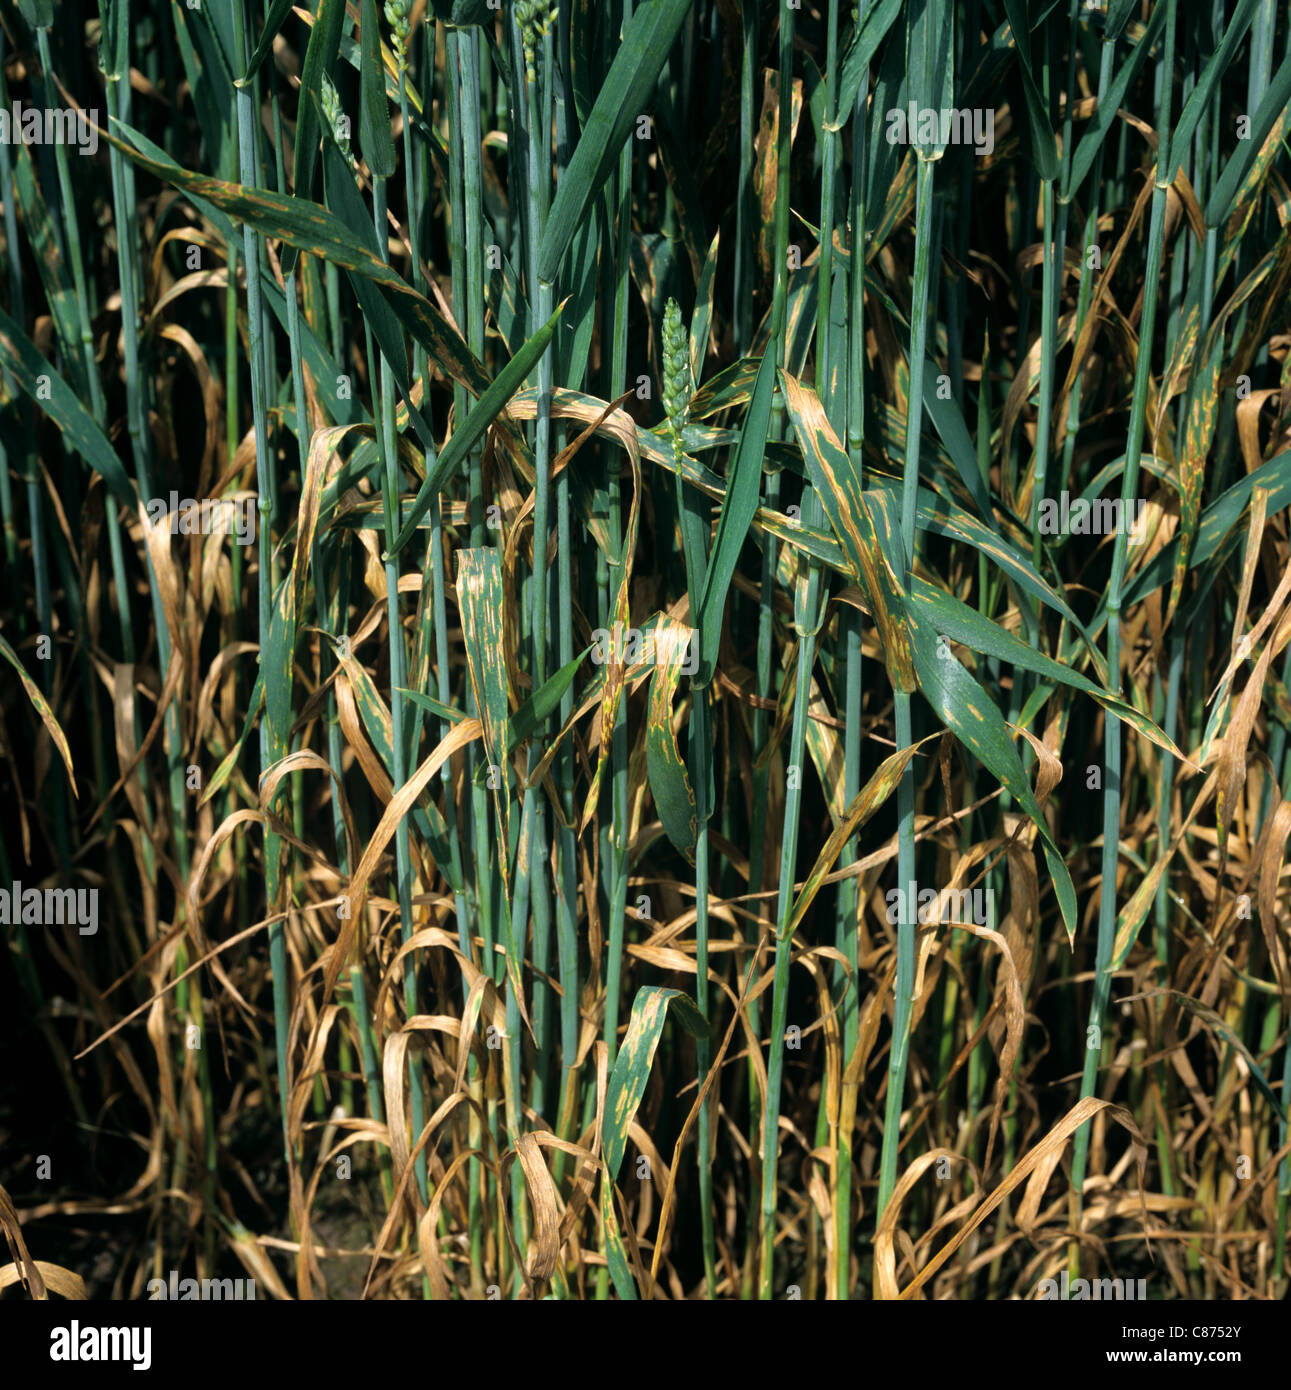 Septoria leaf spot (Septoria tritici) disease damage to wheat crop in ear Stock Photo - Alamy